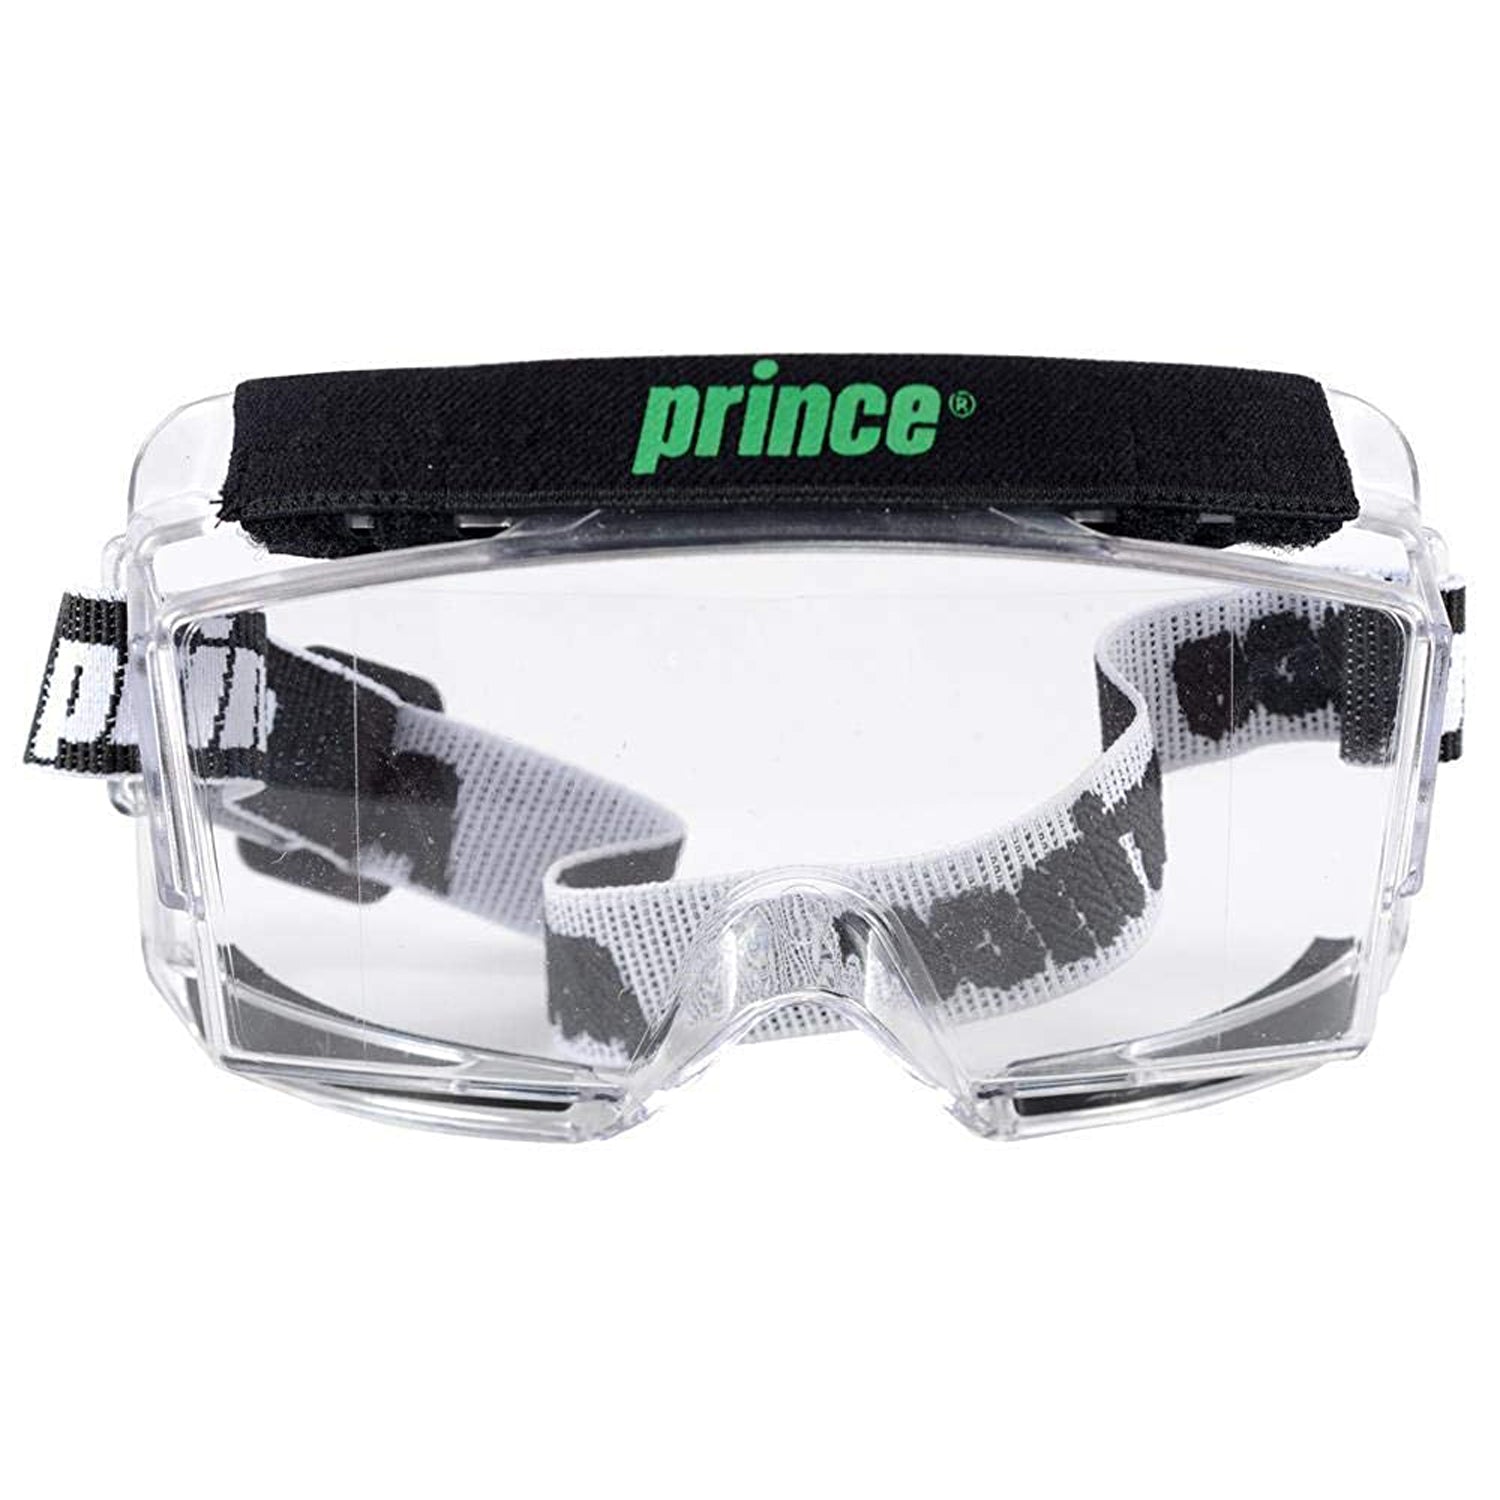 Prince Quantum Squash Goggle - Best Price online Prokicksports.com